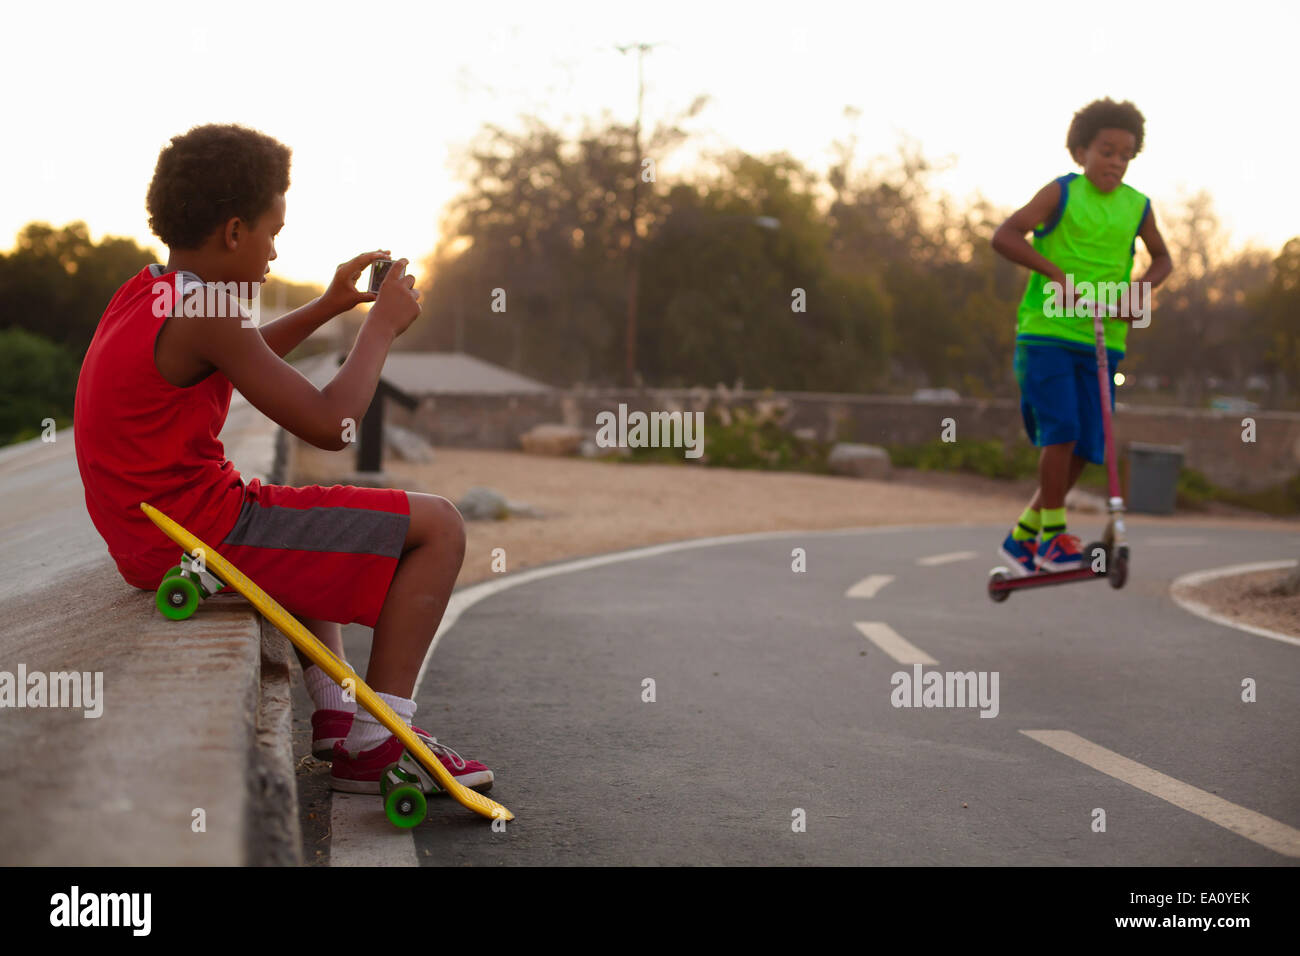 Boy fotografiar hermano haciendo push scooter saltar en carretera Foto de stock